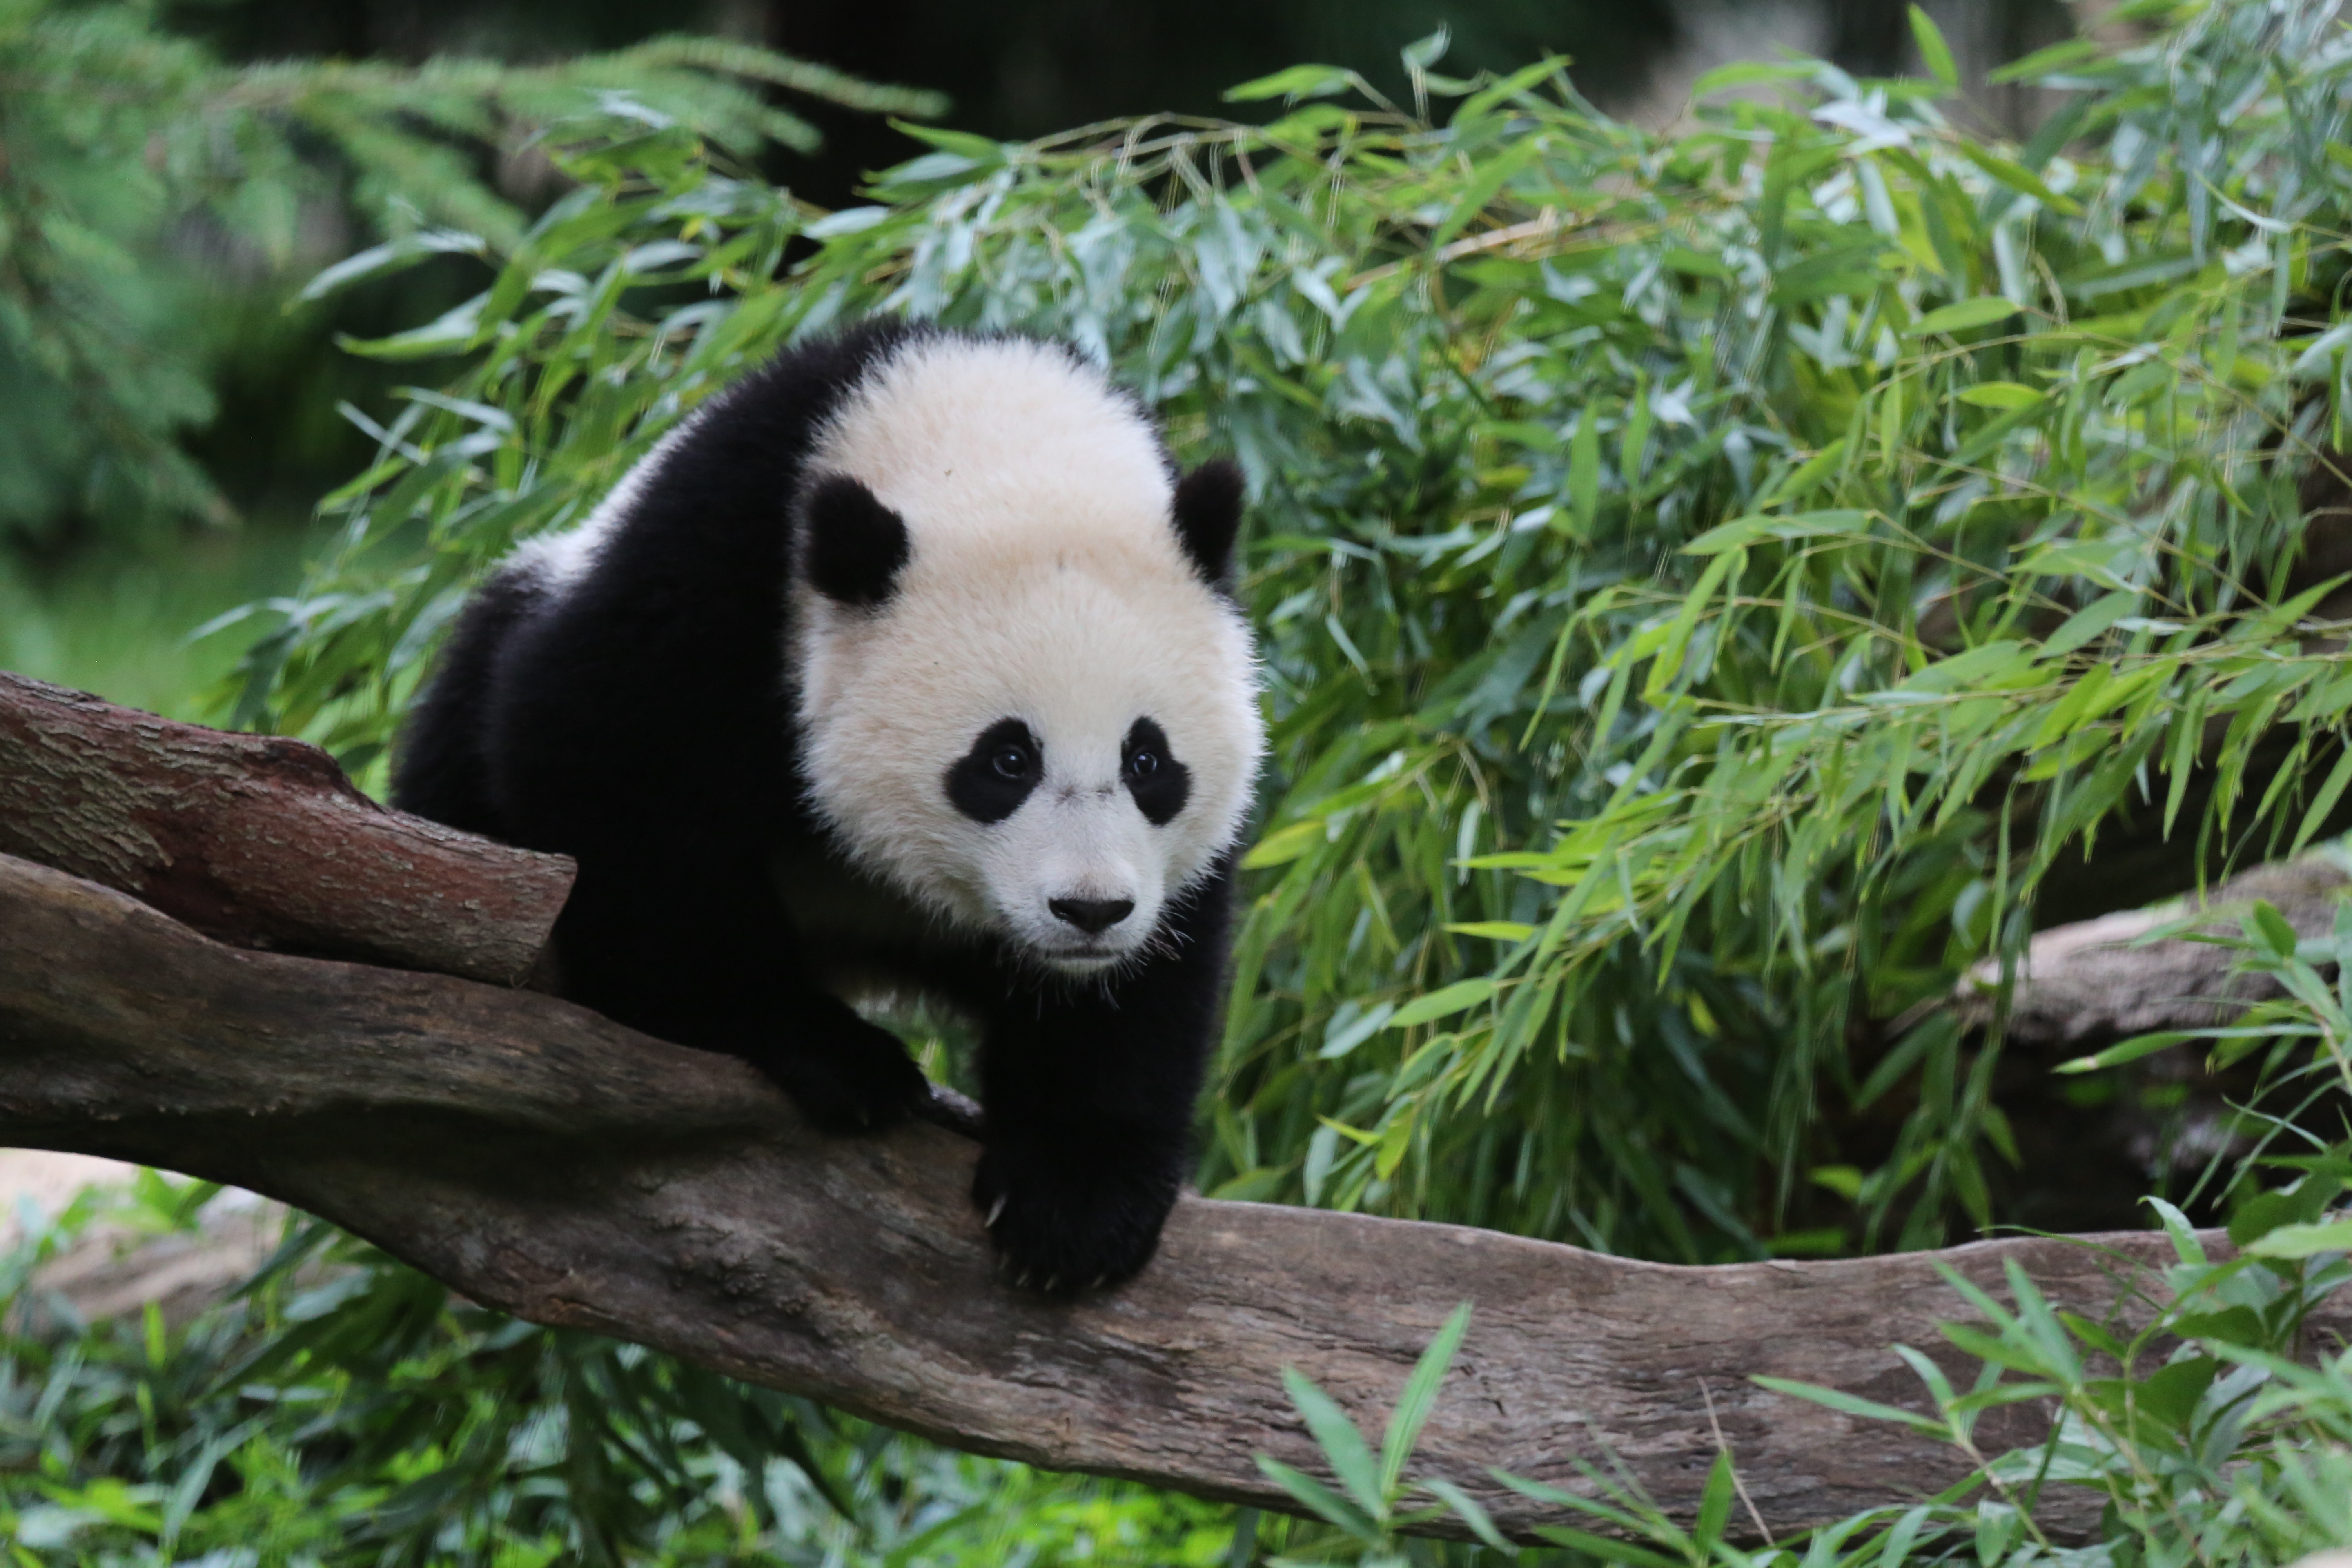 Washington's National Zoo says bye bye to beloved giant pandas